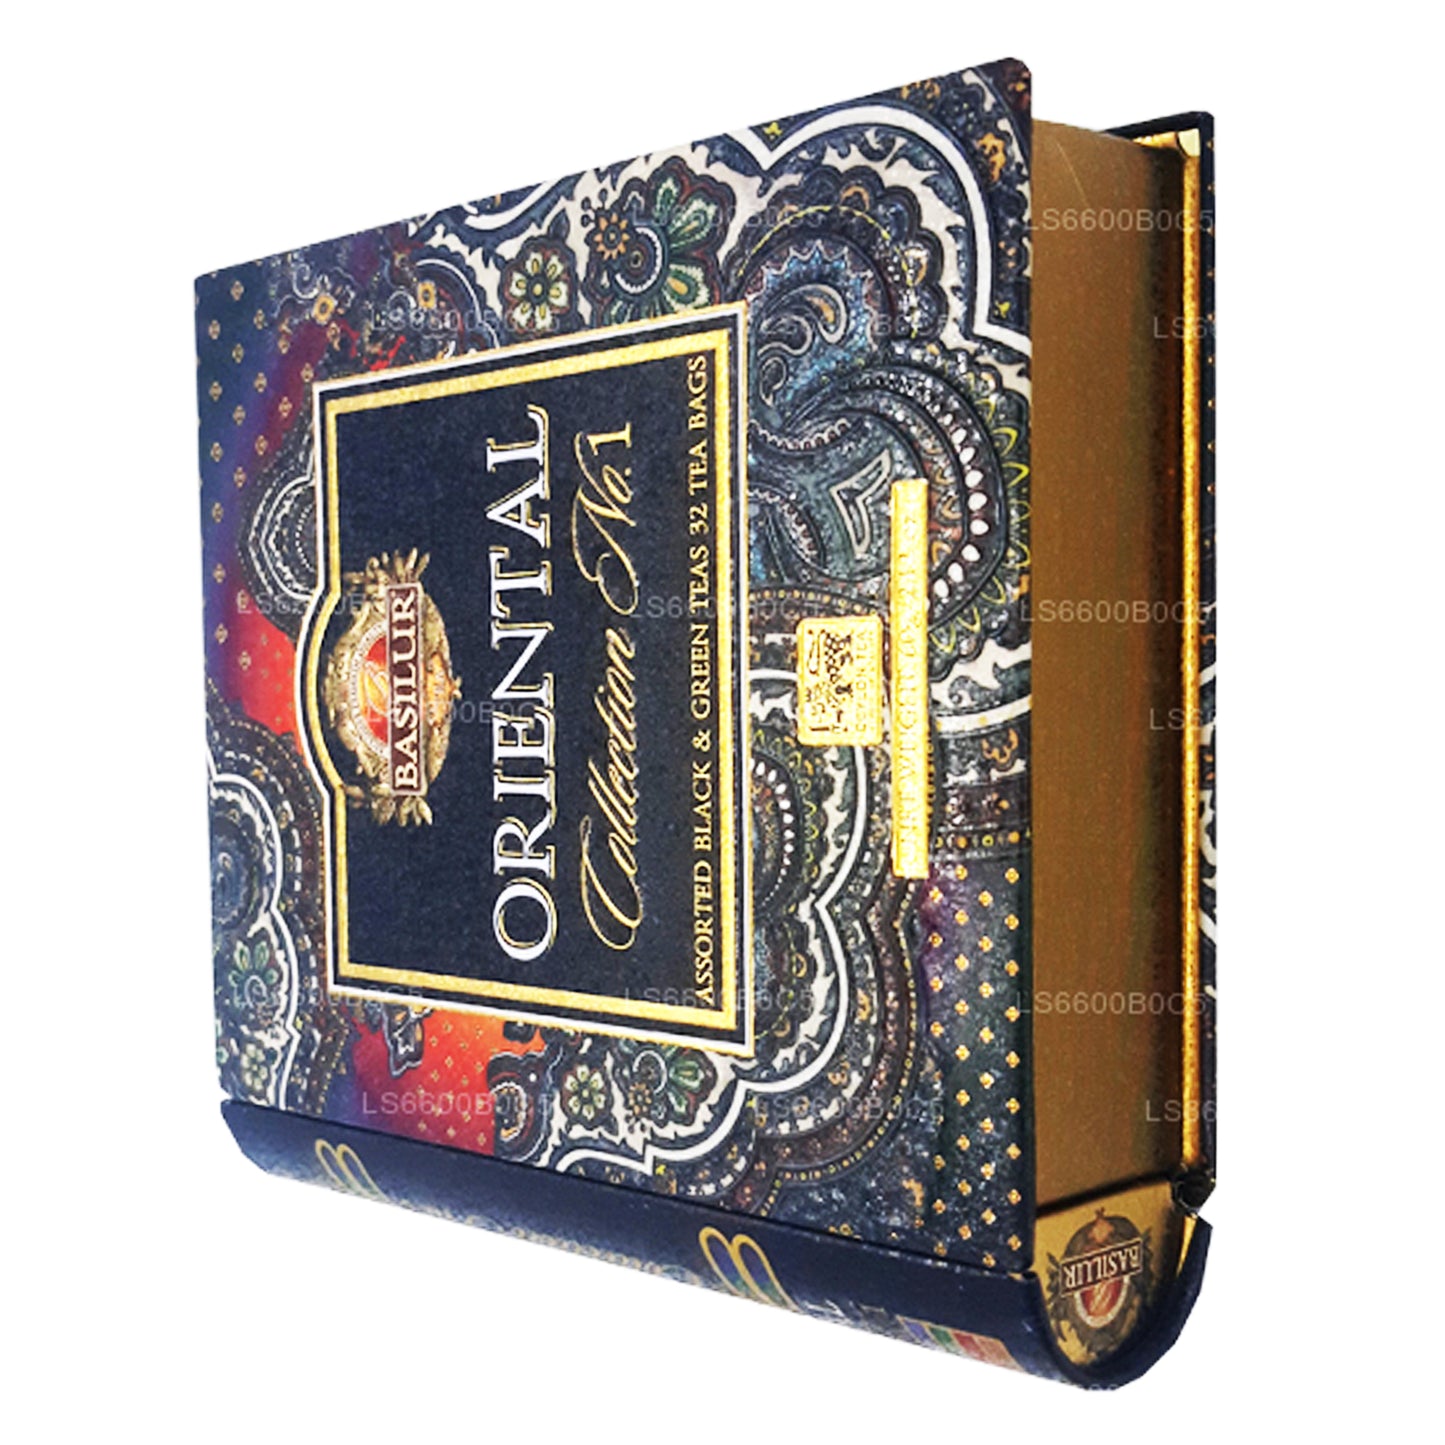 Basilur Oriental Collection Čajová kniha Vol 1 (60g) 32 čajových sáčků